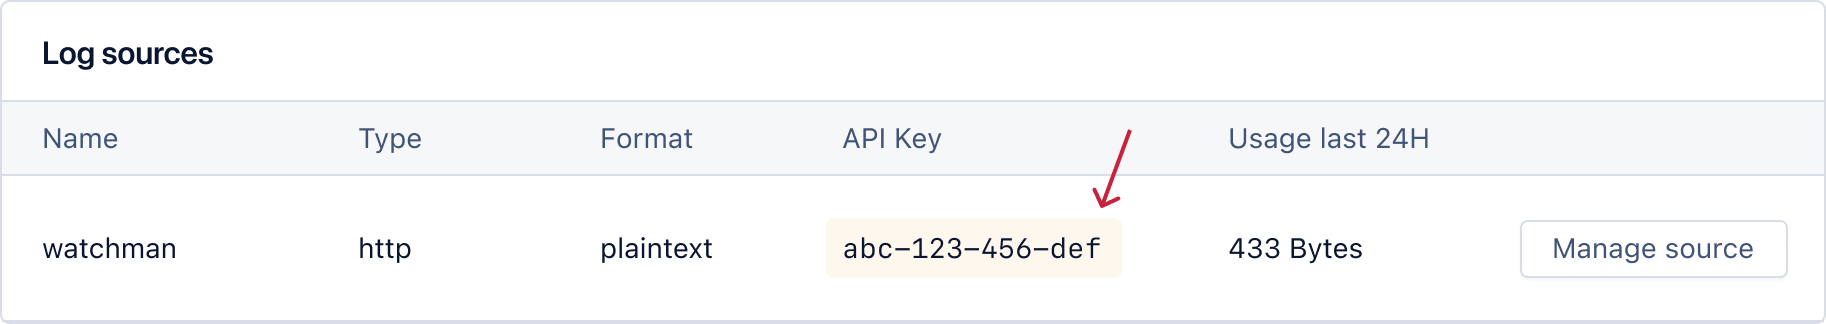 Screenshot of Log Sources table highlighting API key